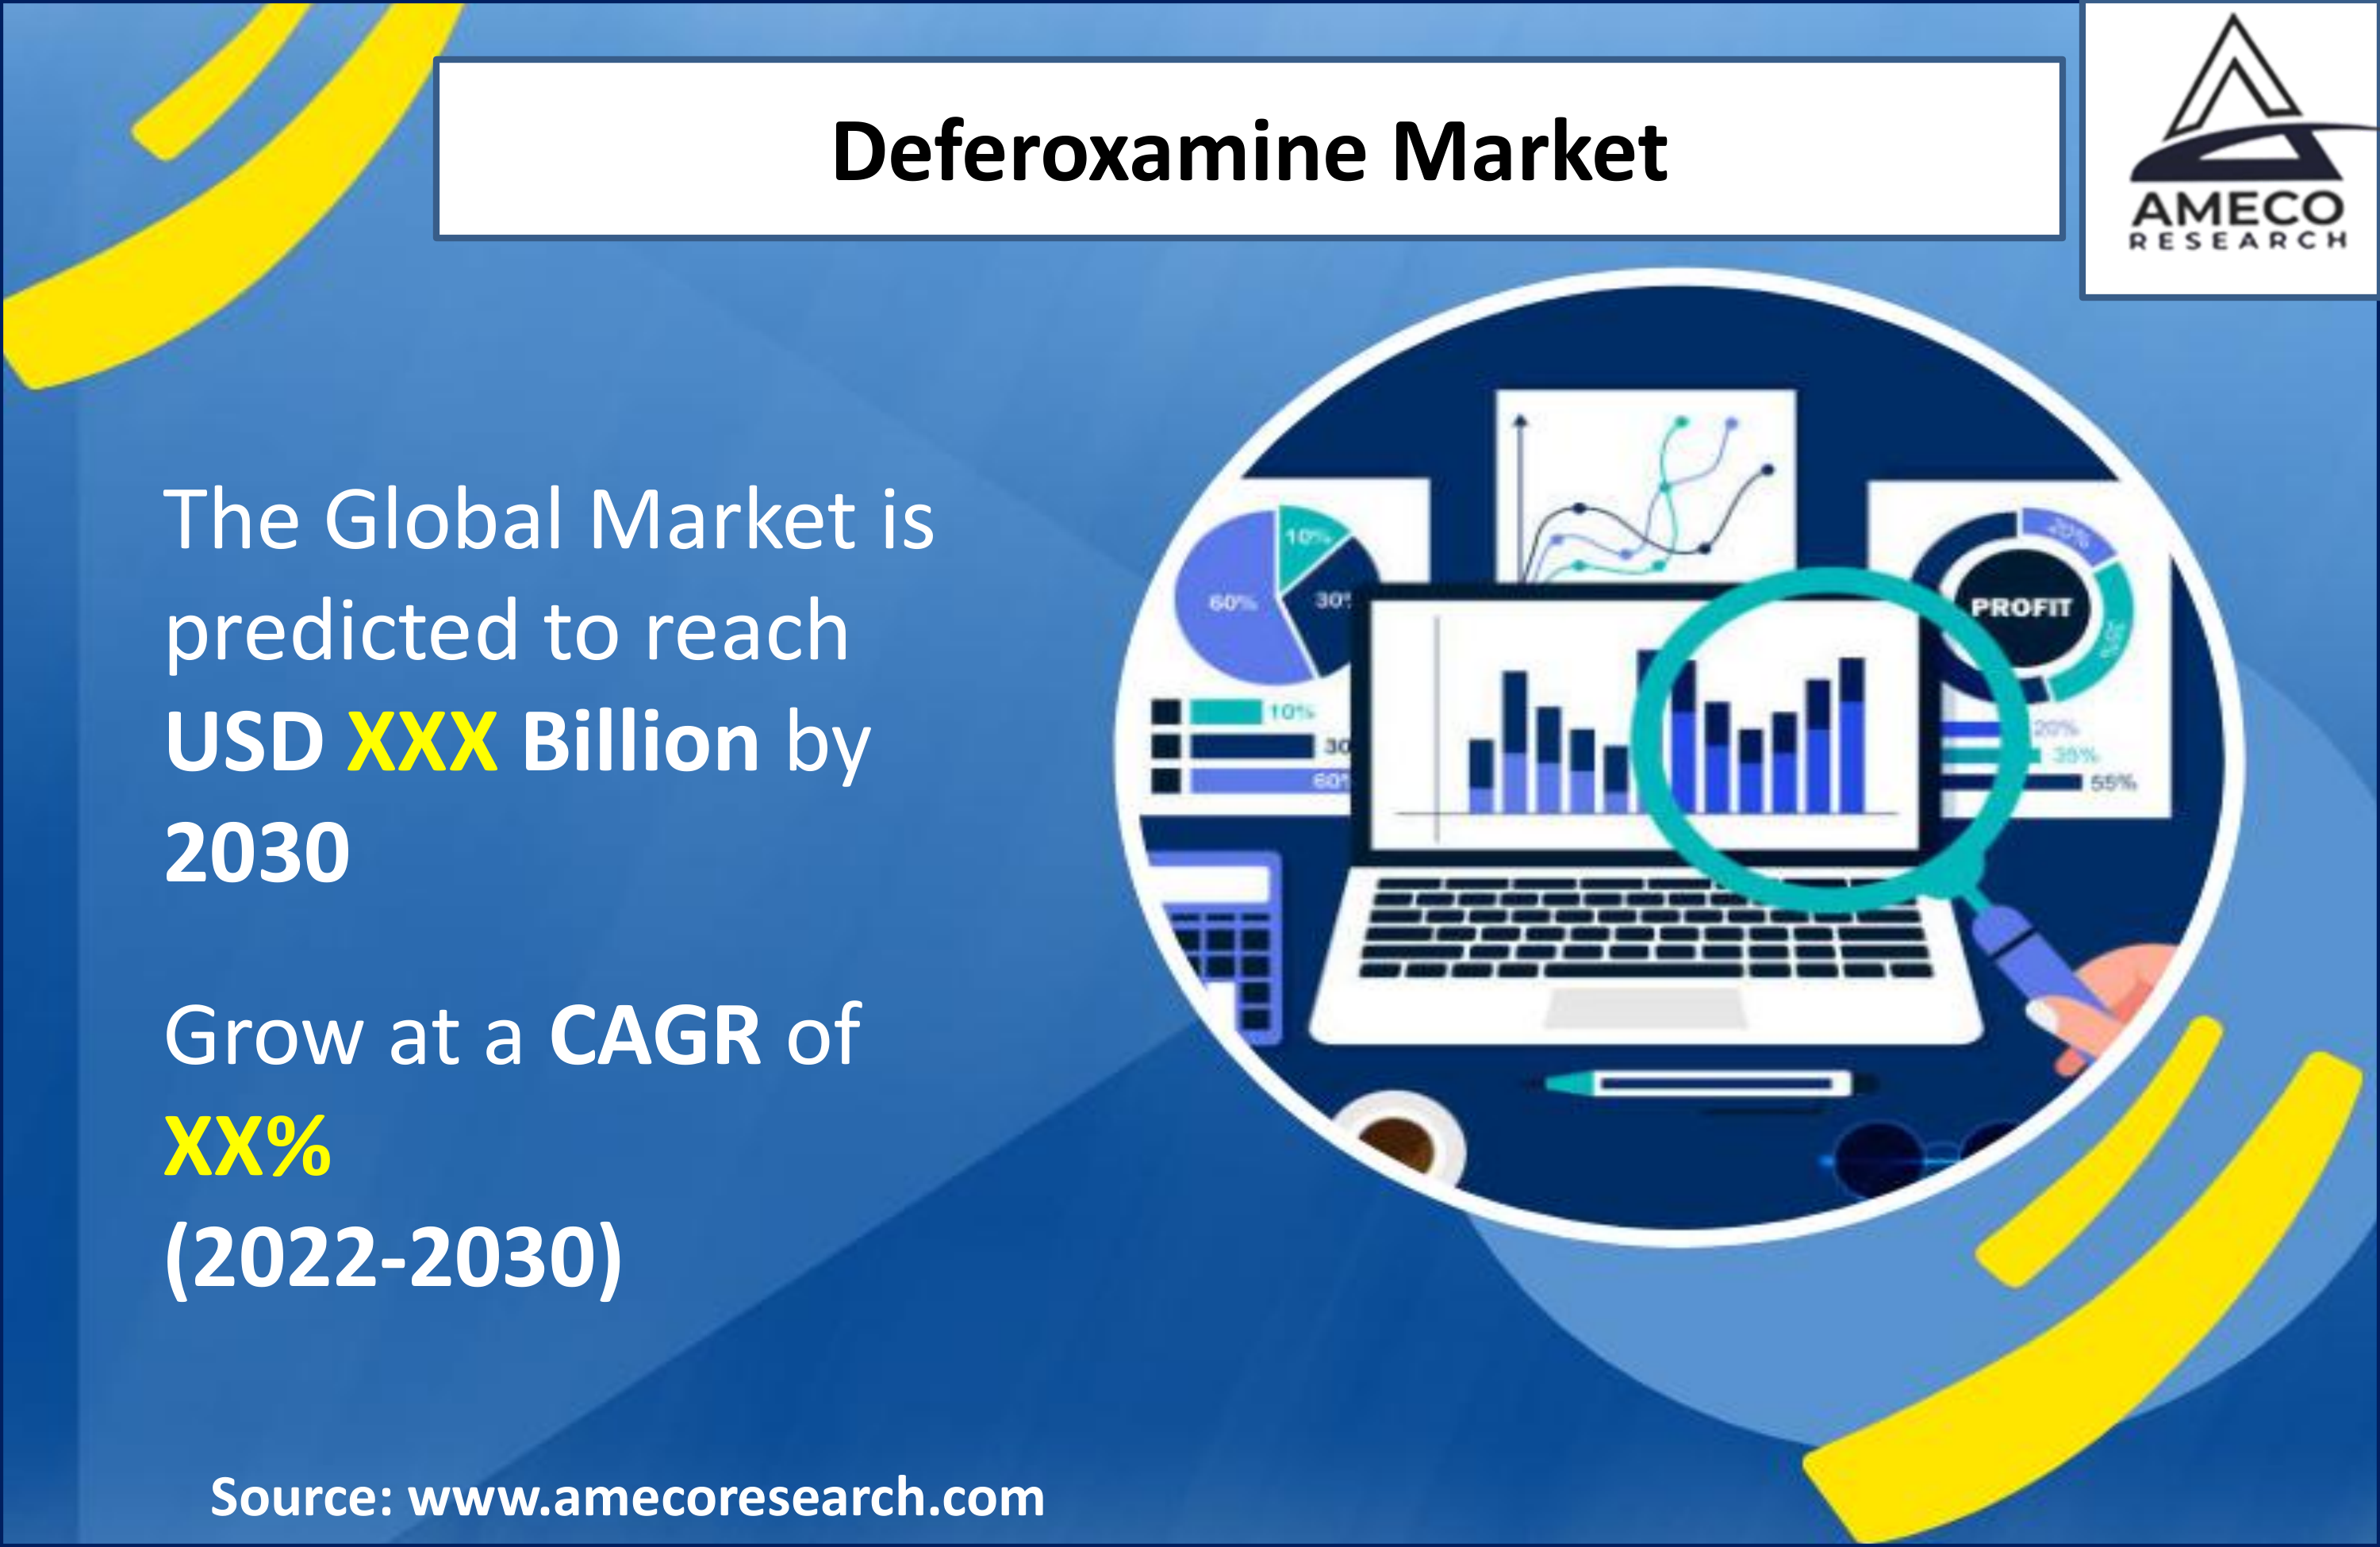 Deferoxamine Market